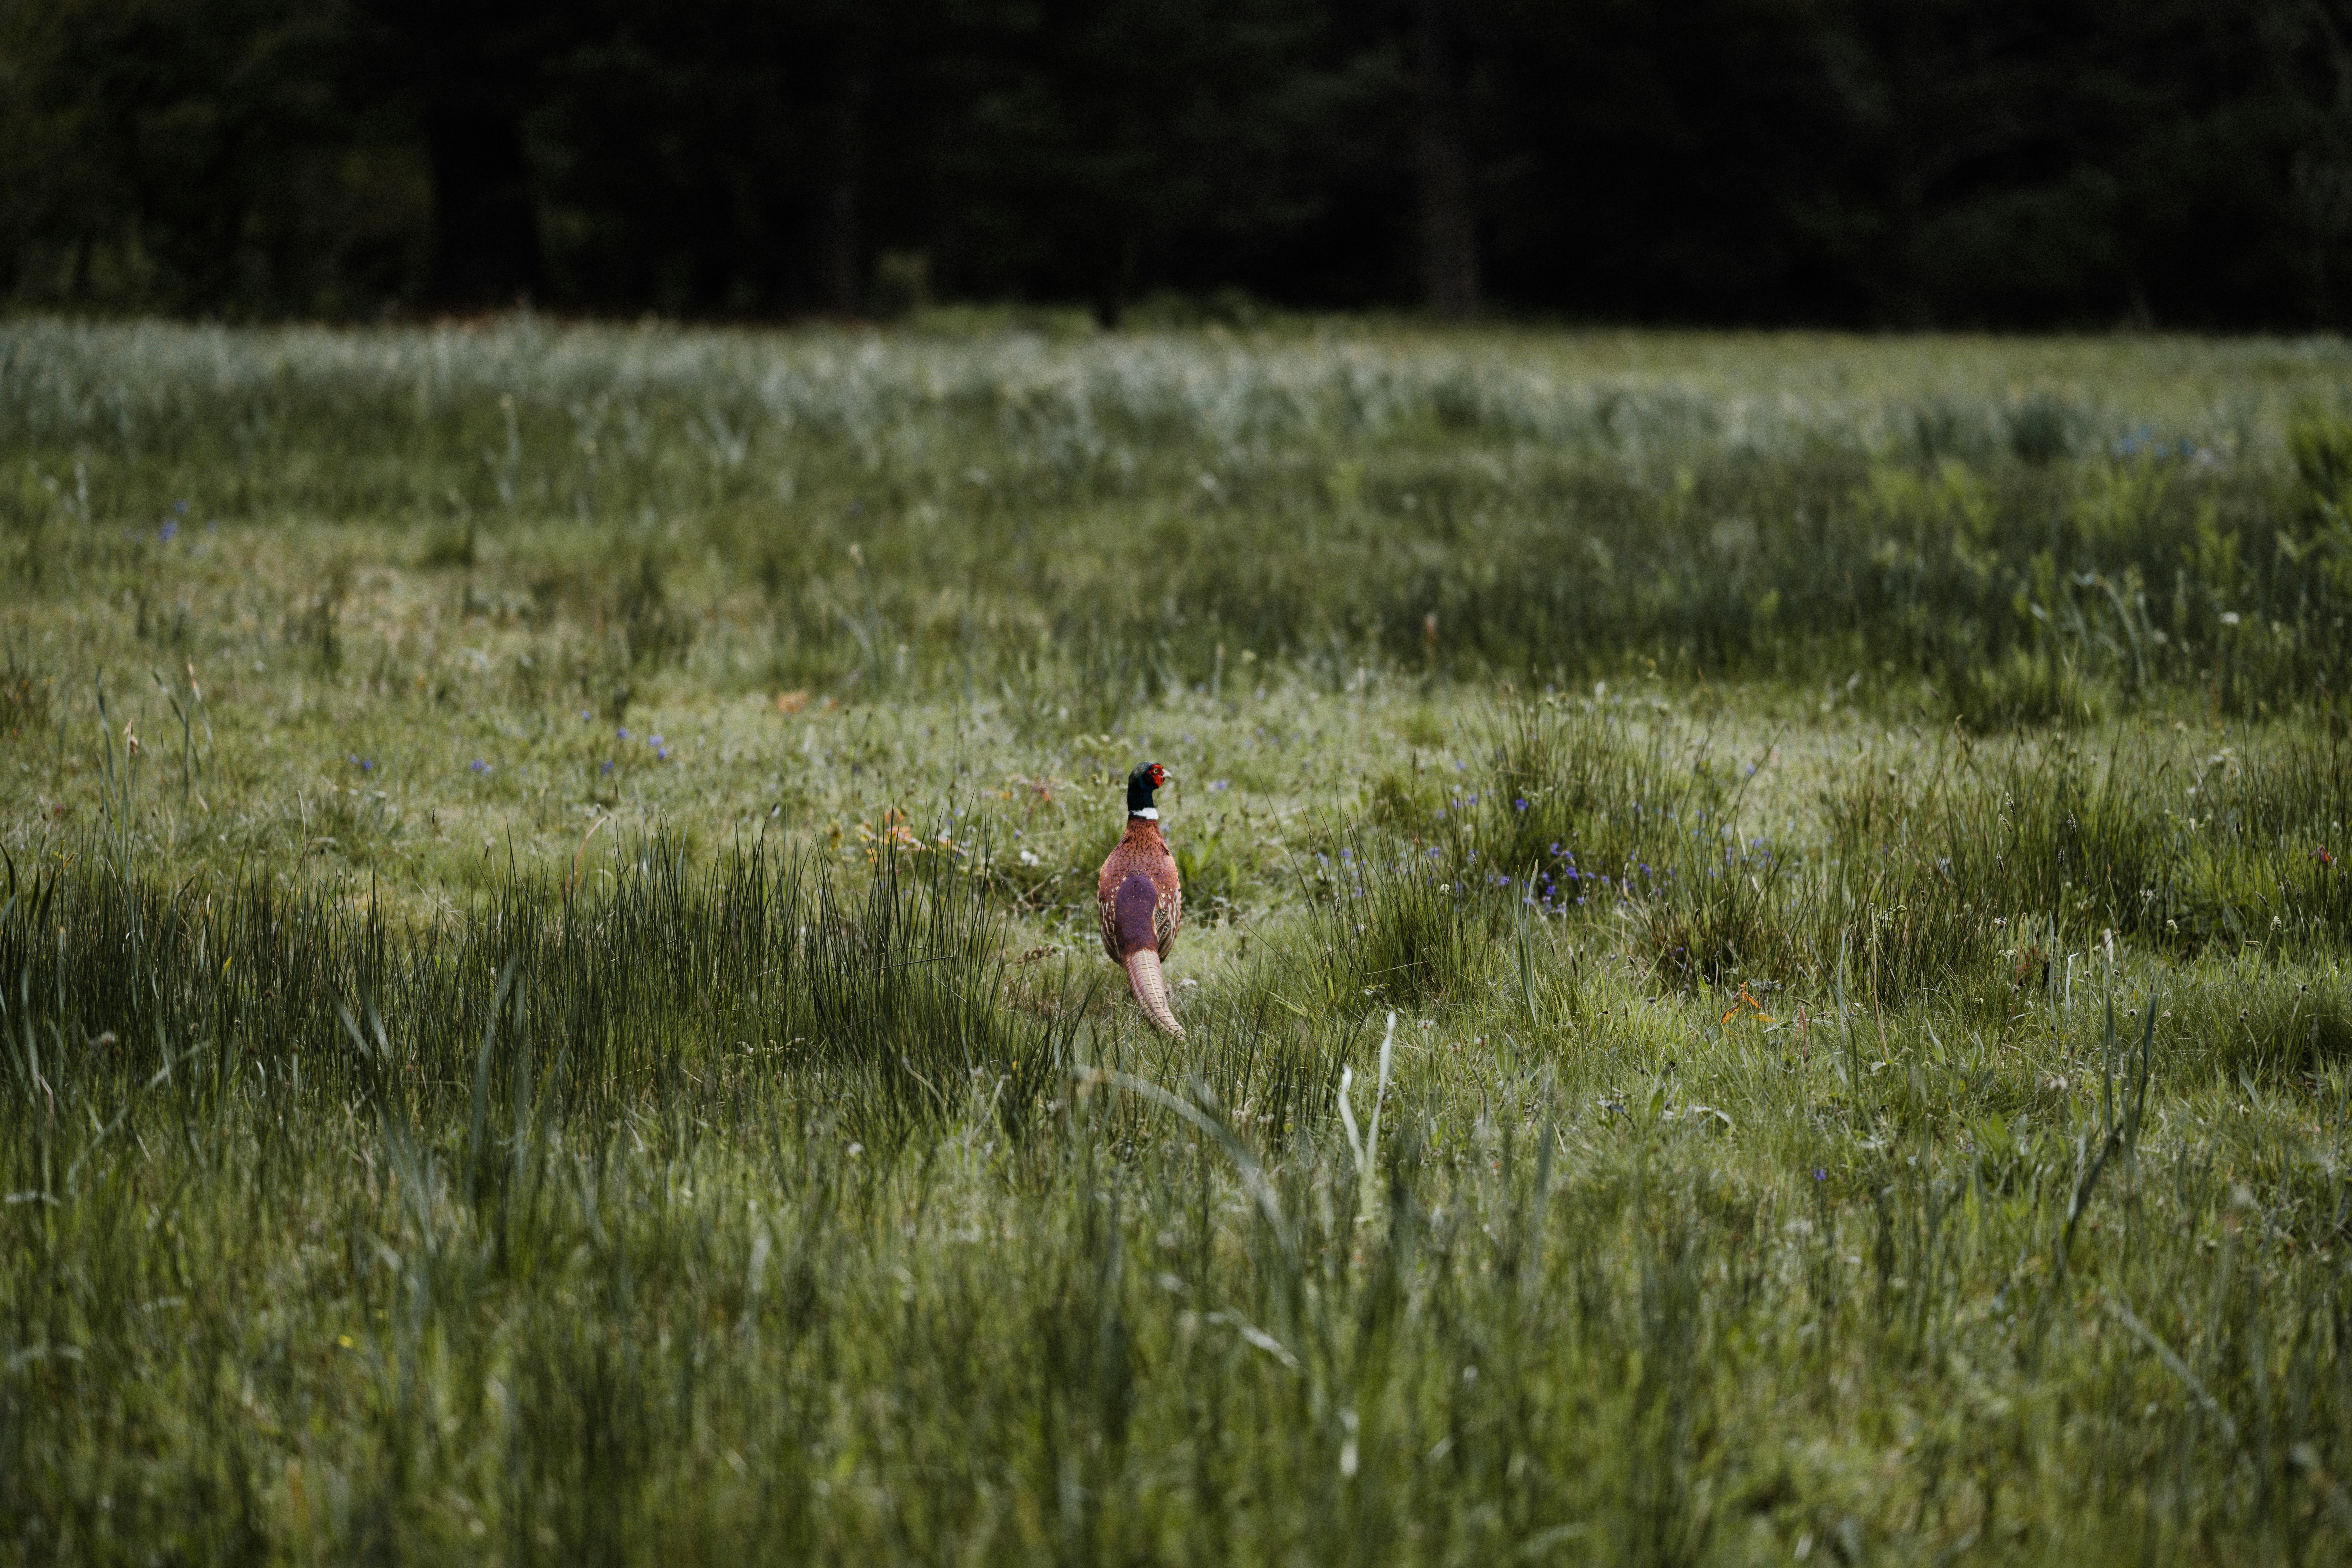 girl in pink dress running on green grass field during daytime